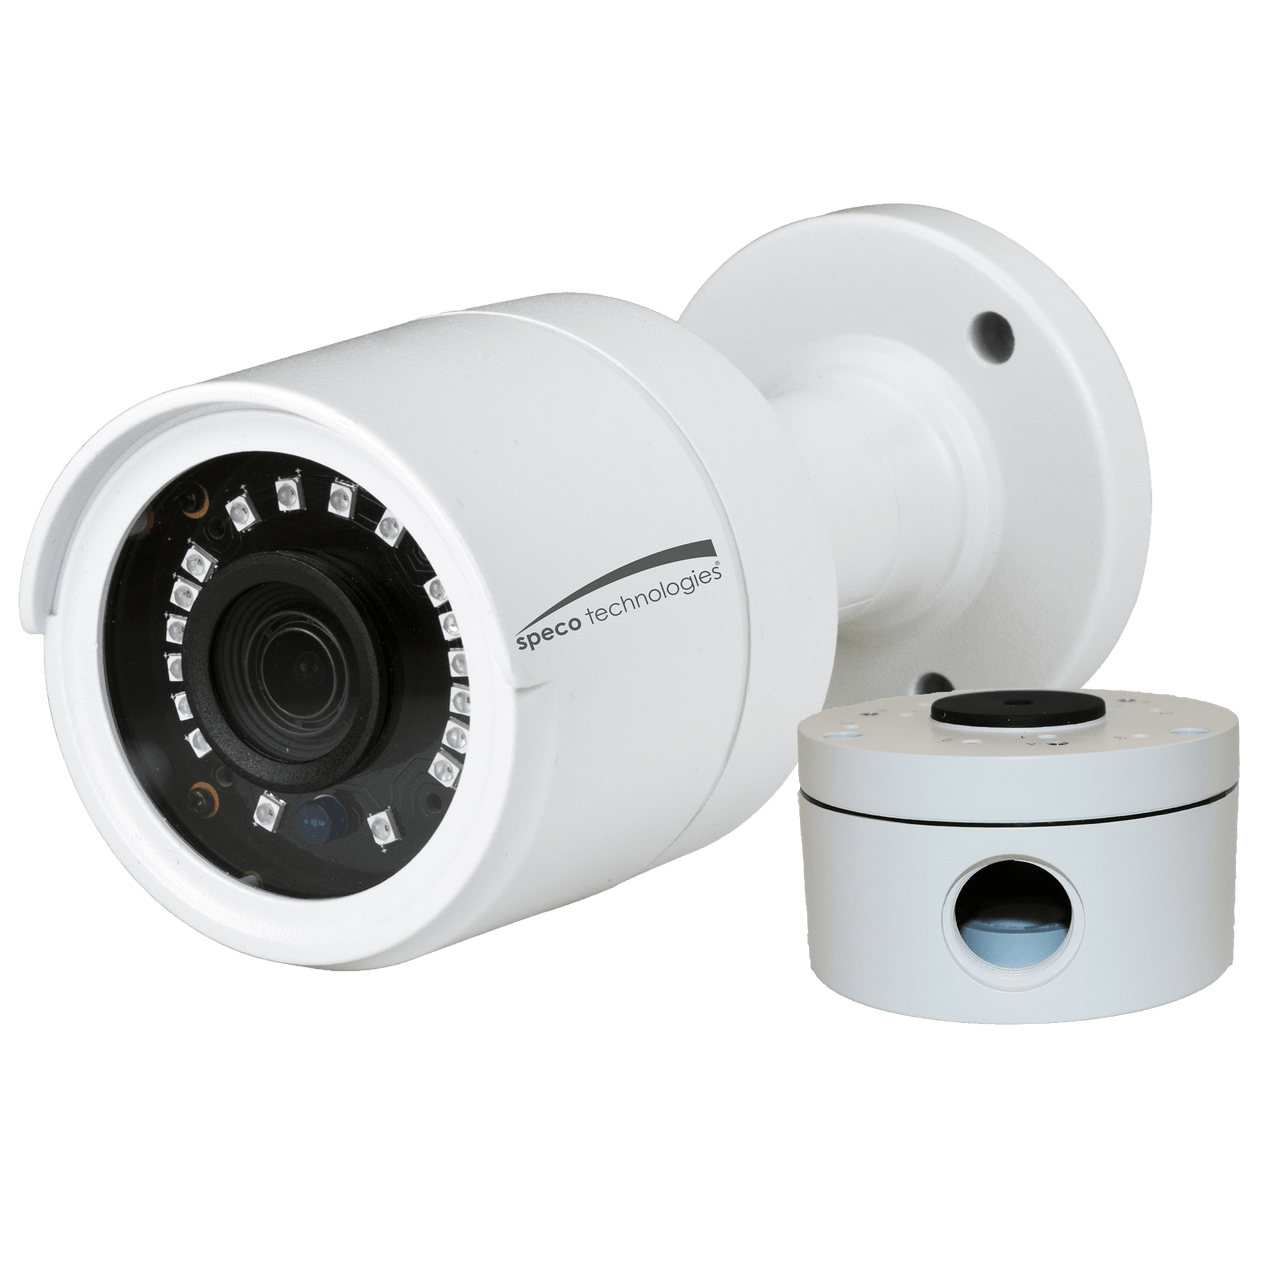 Speco Technologies SPE-O2VLB7 2MP IP Bullet Camera, IR, 2.8mm lens, Included Junc Box,White (SPE-O2VLB7)